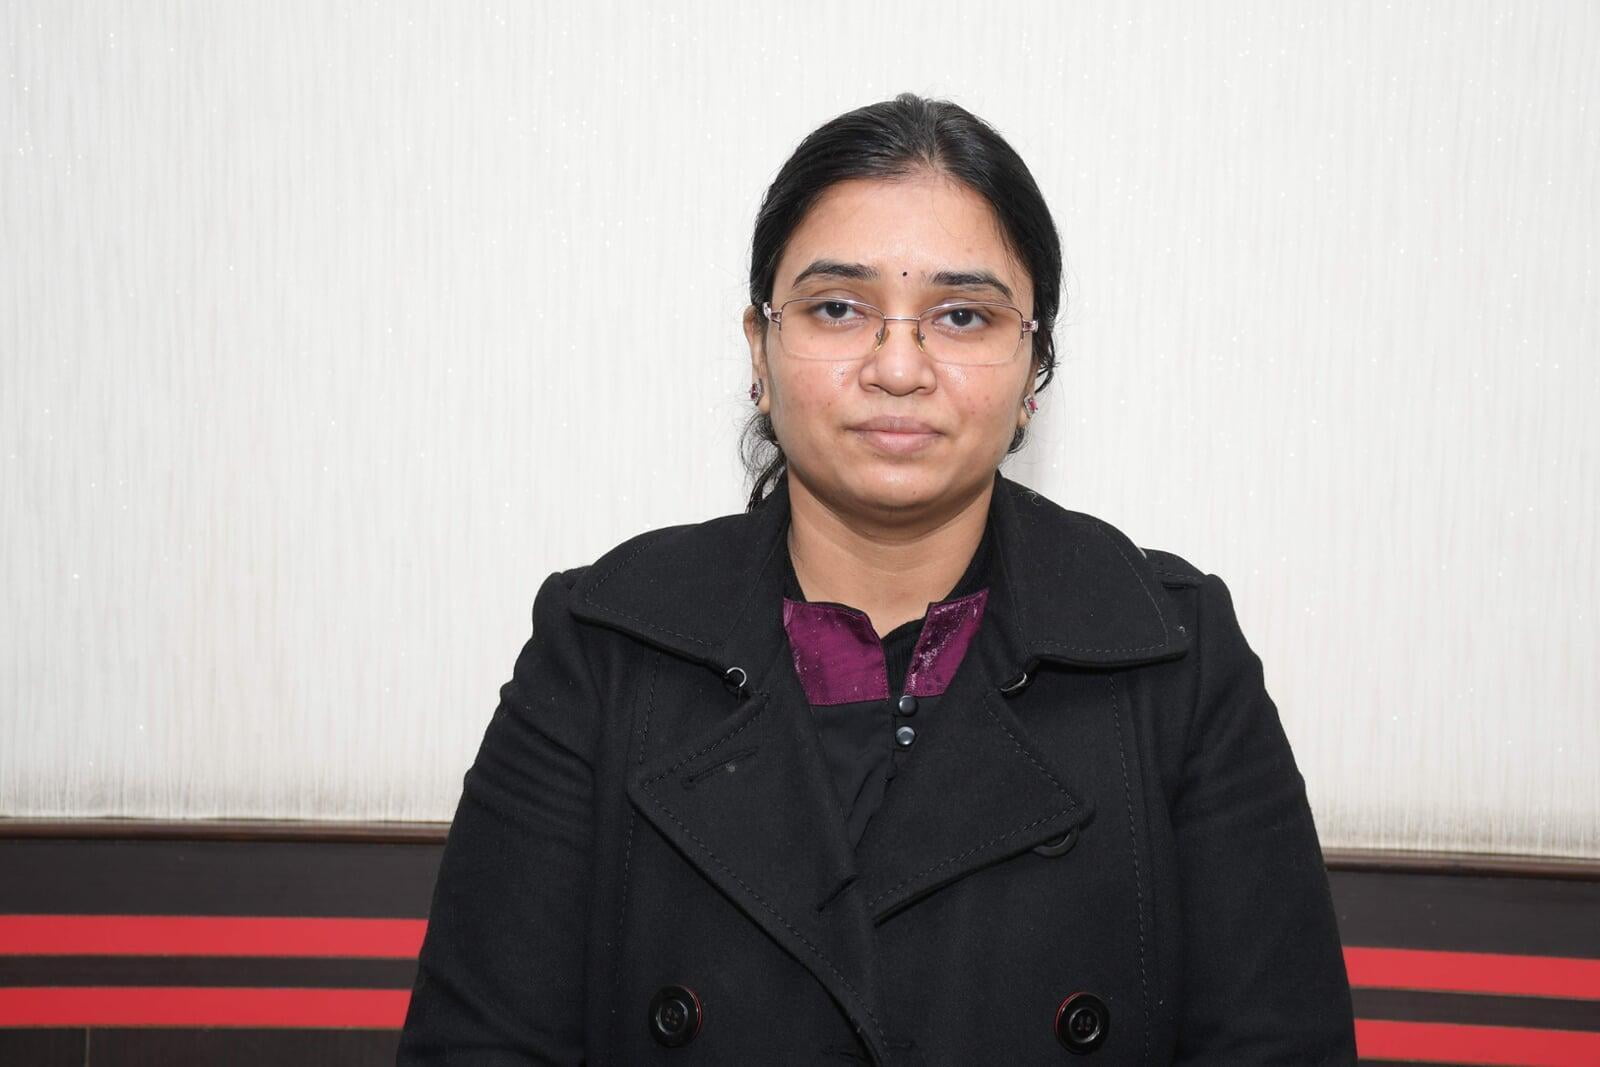 Dr. Divya Mishra B.Tech Civil Engineering Faculty at ITS